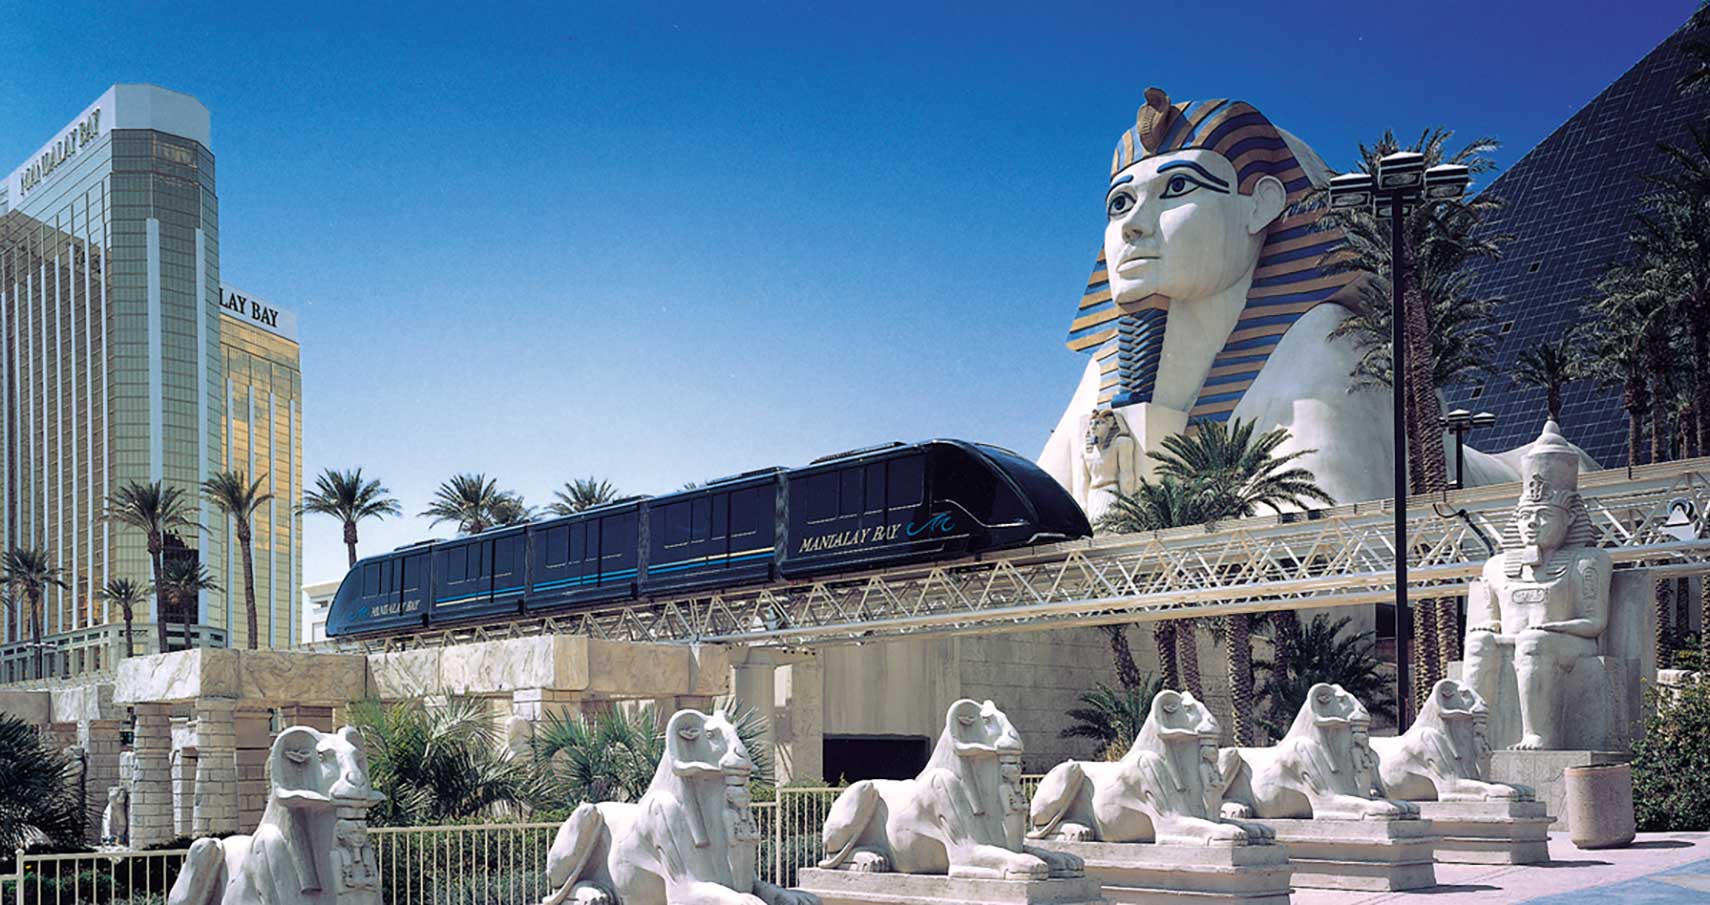 Mandalay Bay train in Las Vegas